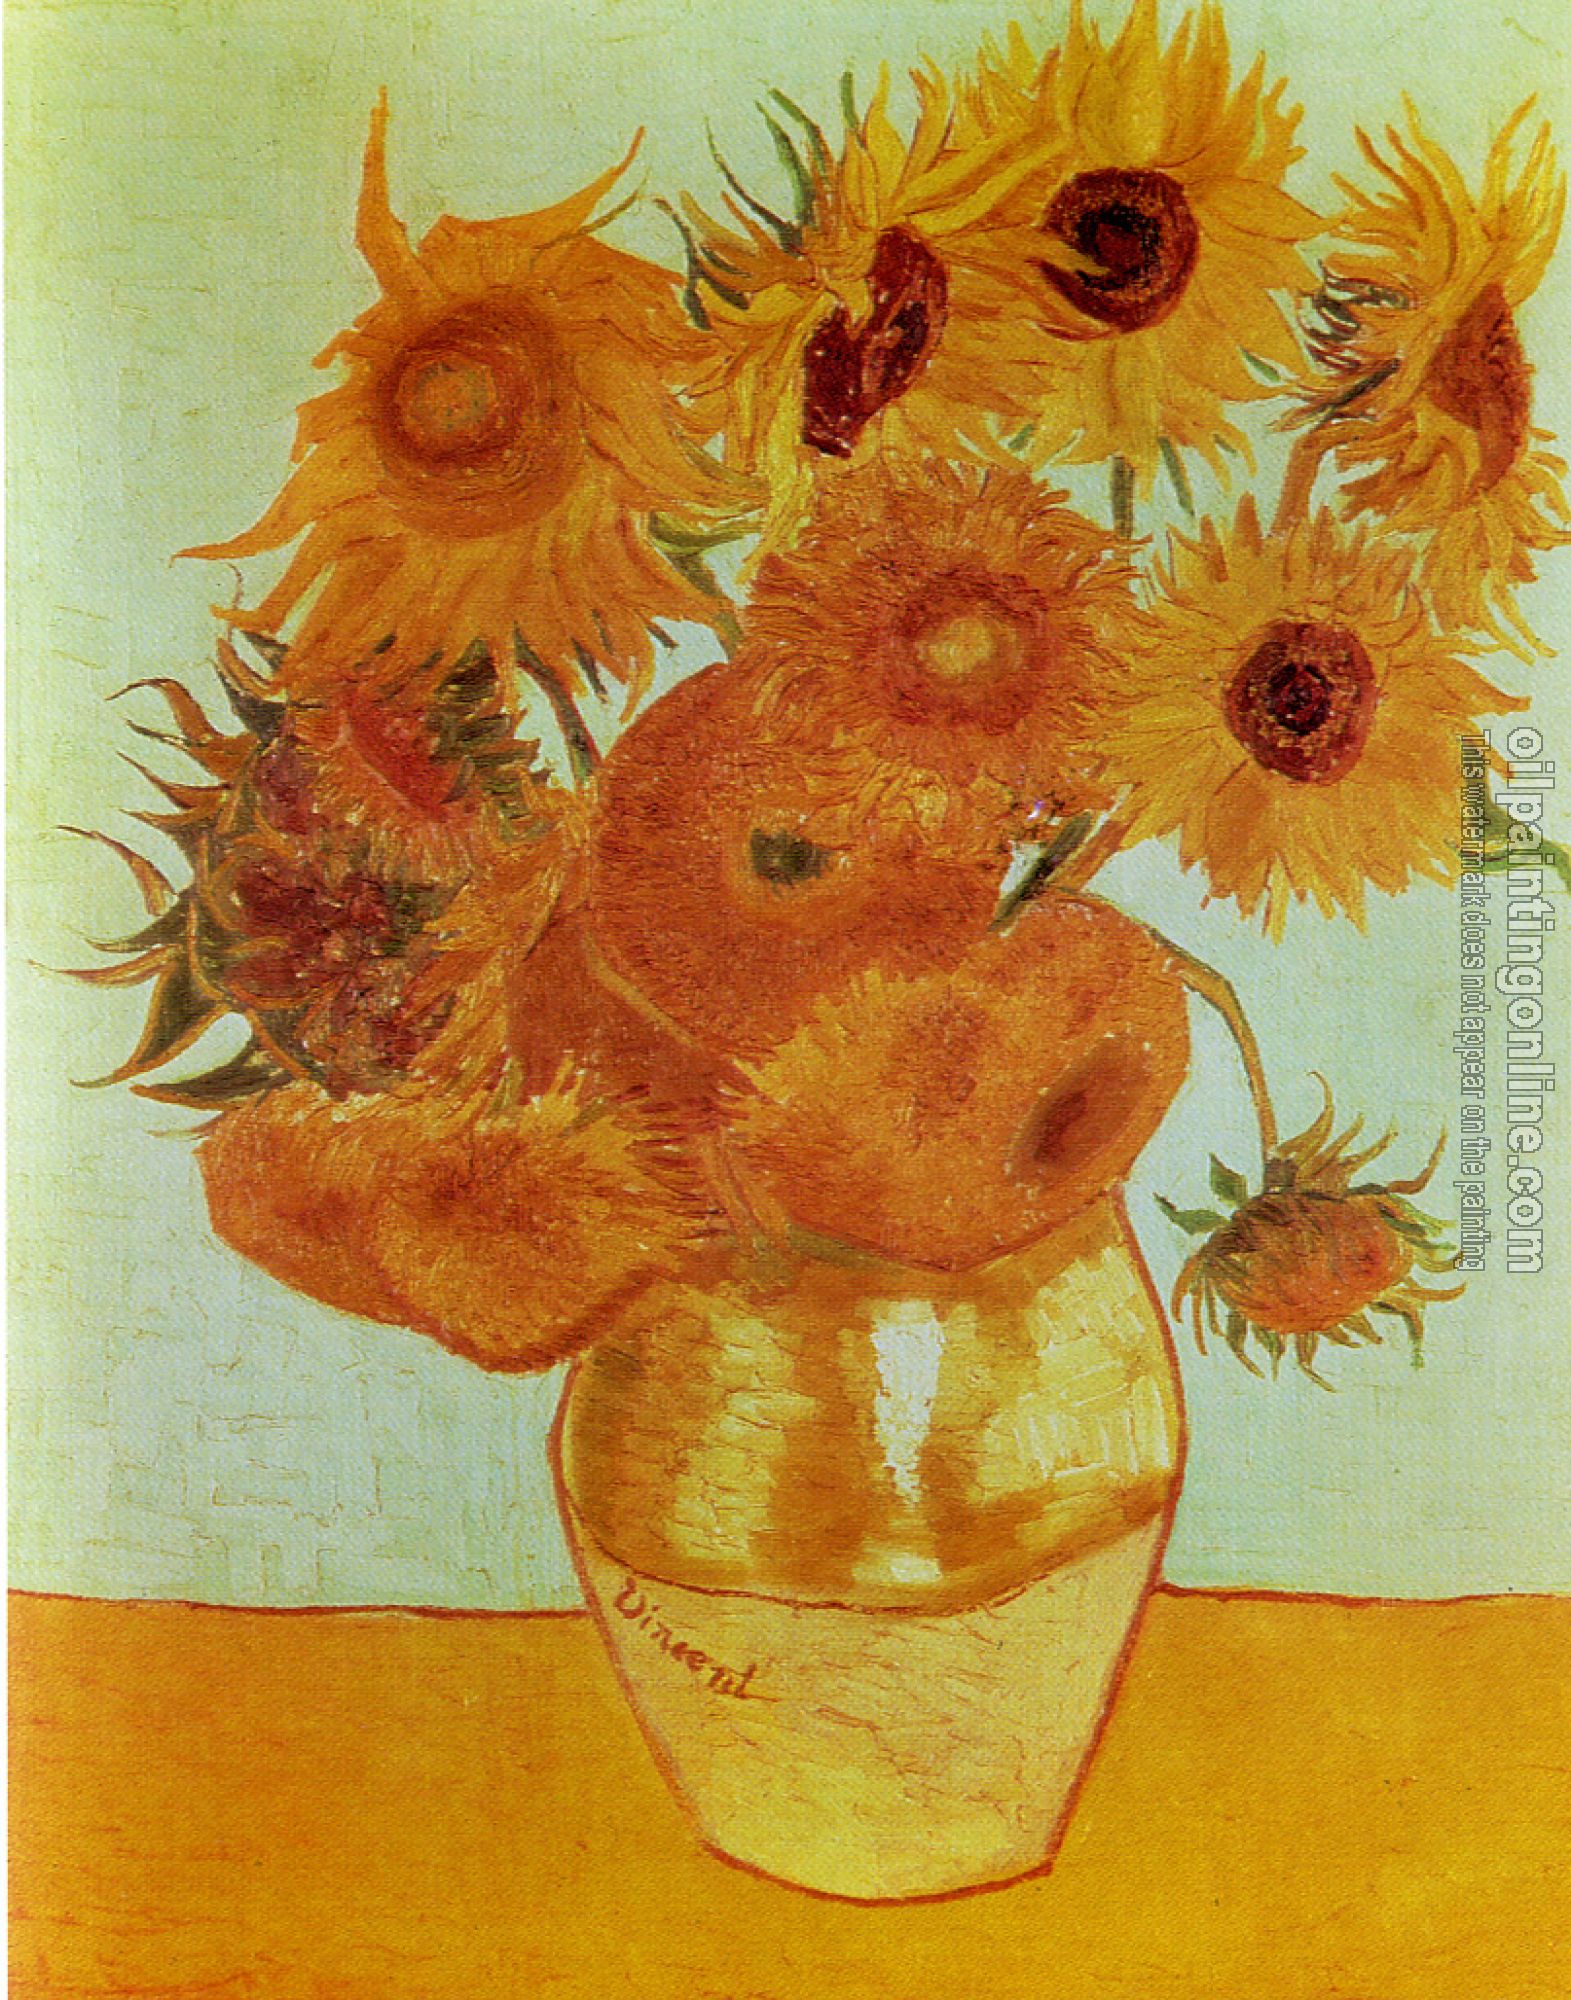 Gogh, Vincent van - Twelve sunflowers in a vase